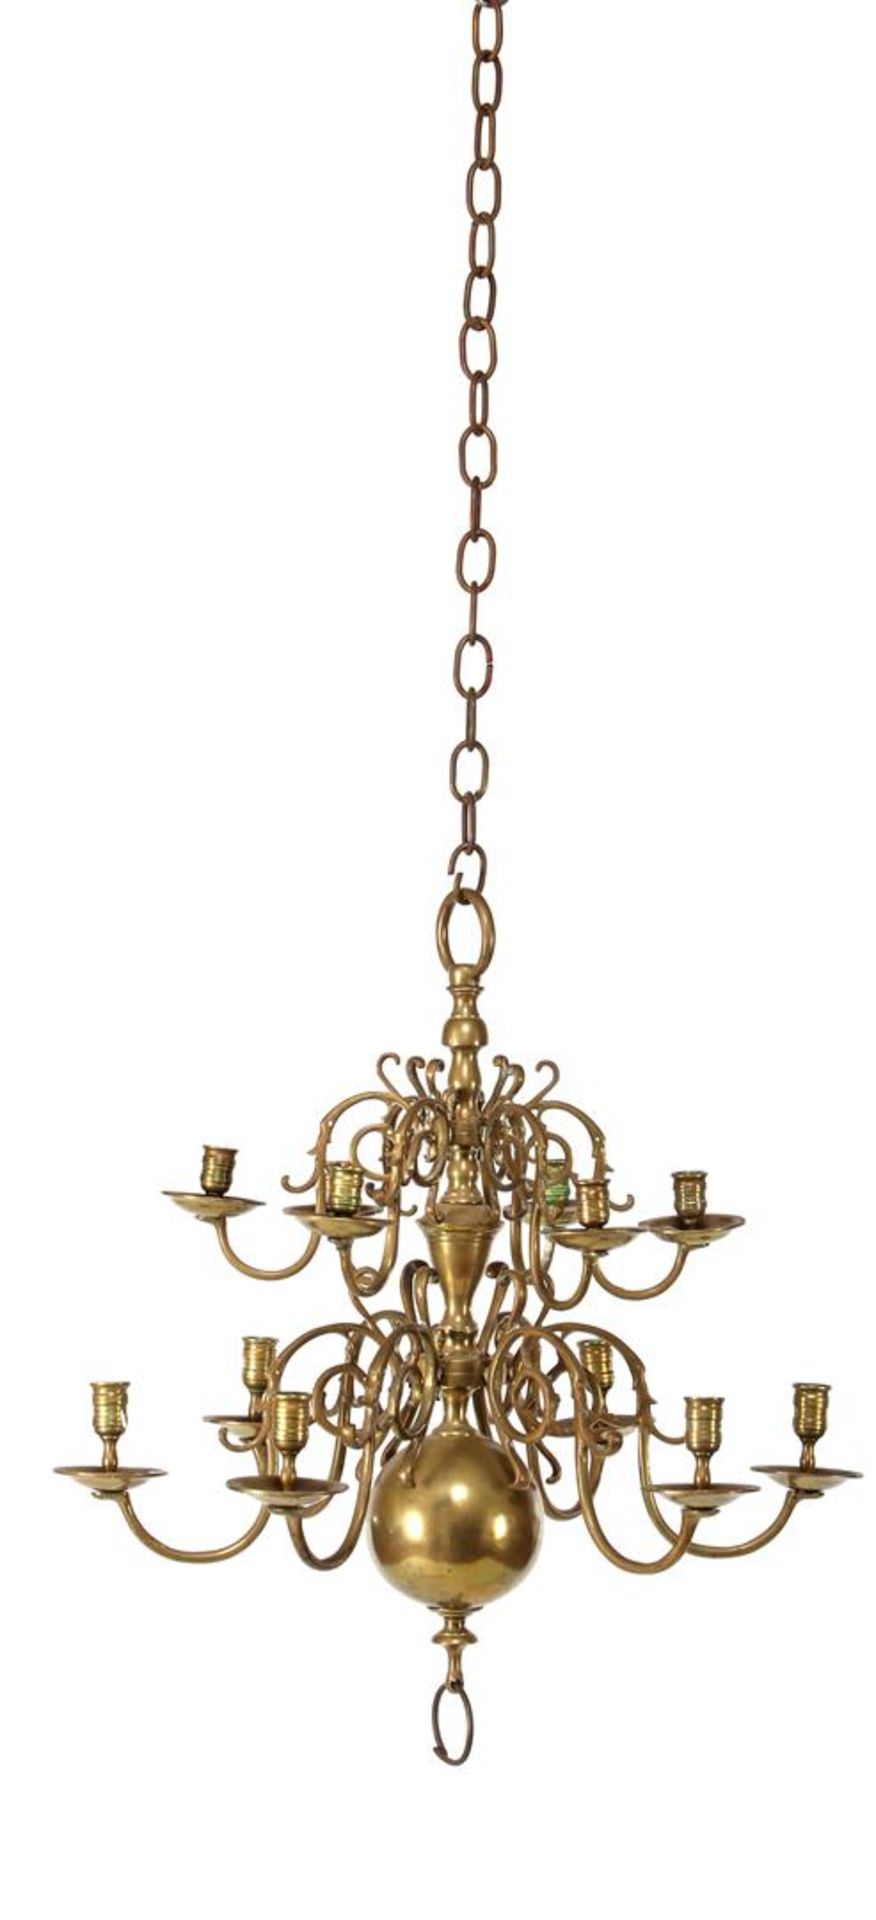 Brass double ball chandelier